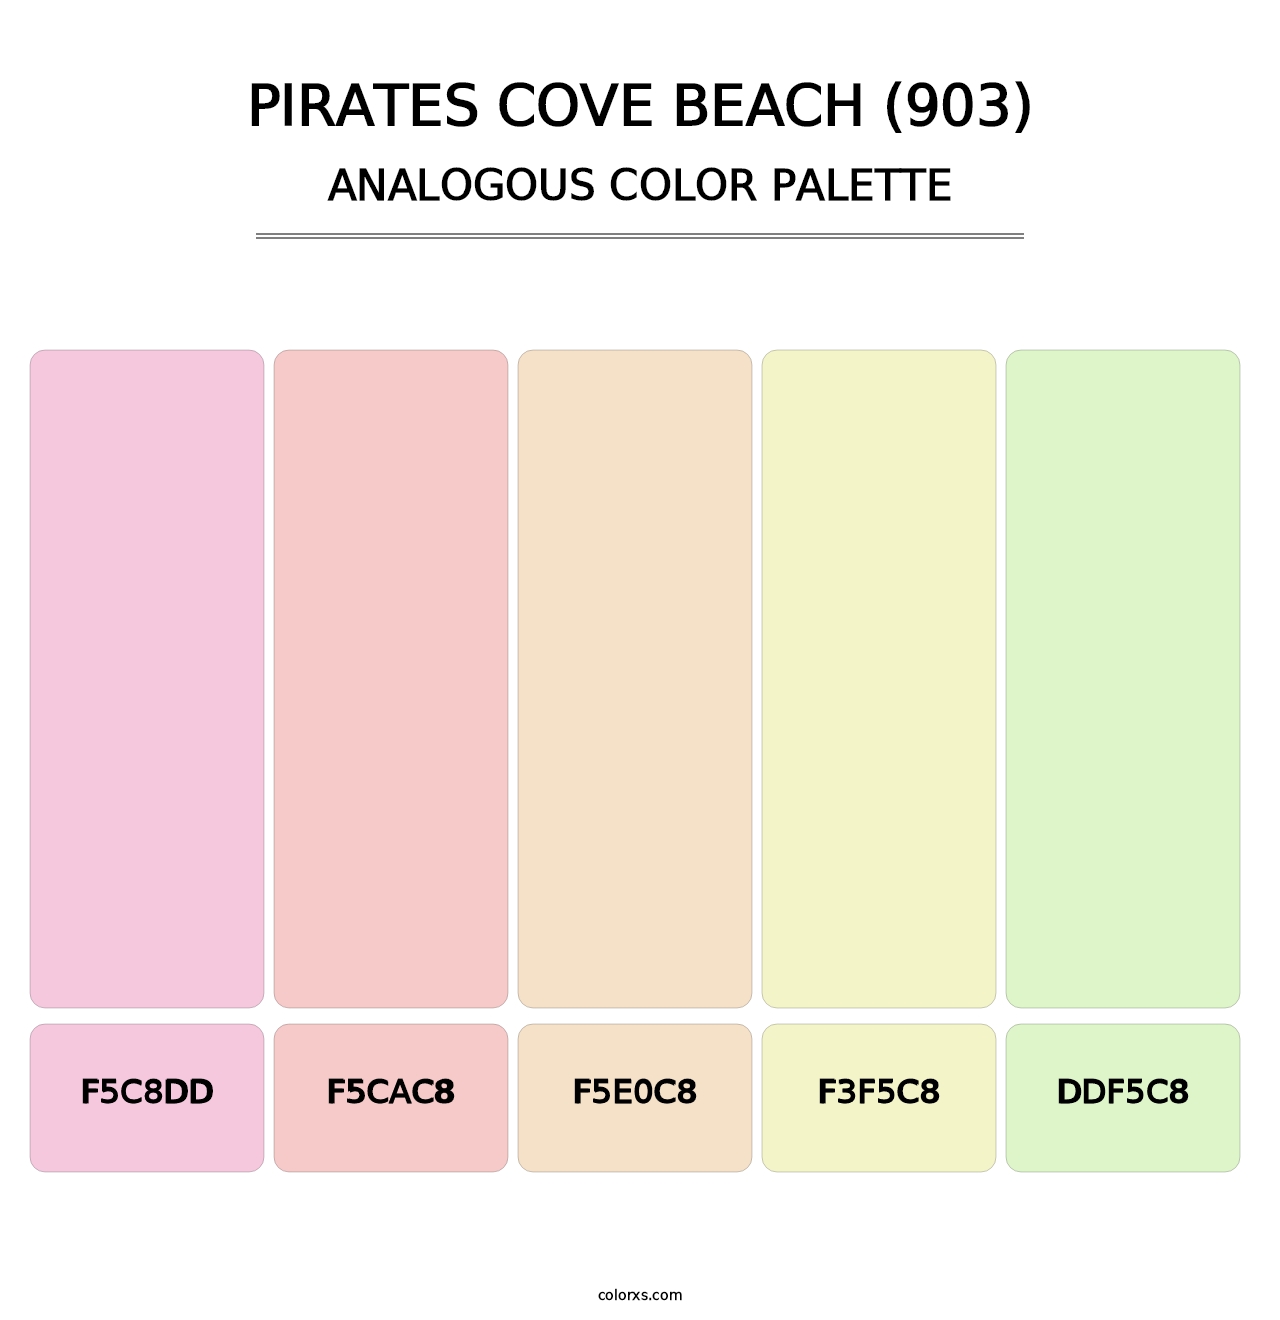 Pirates Cove Beach (903) - Analogous Color Palette